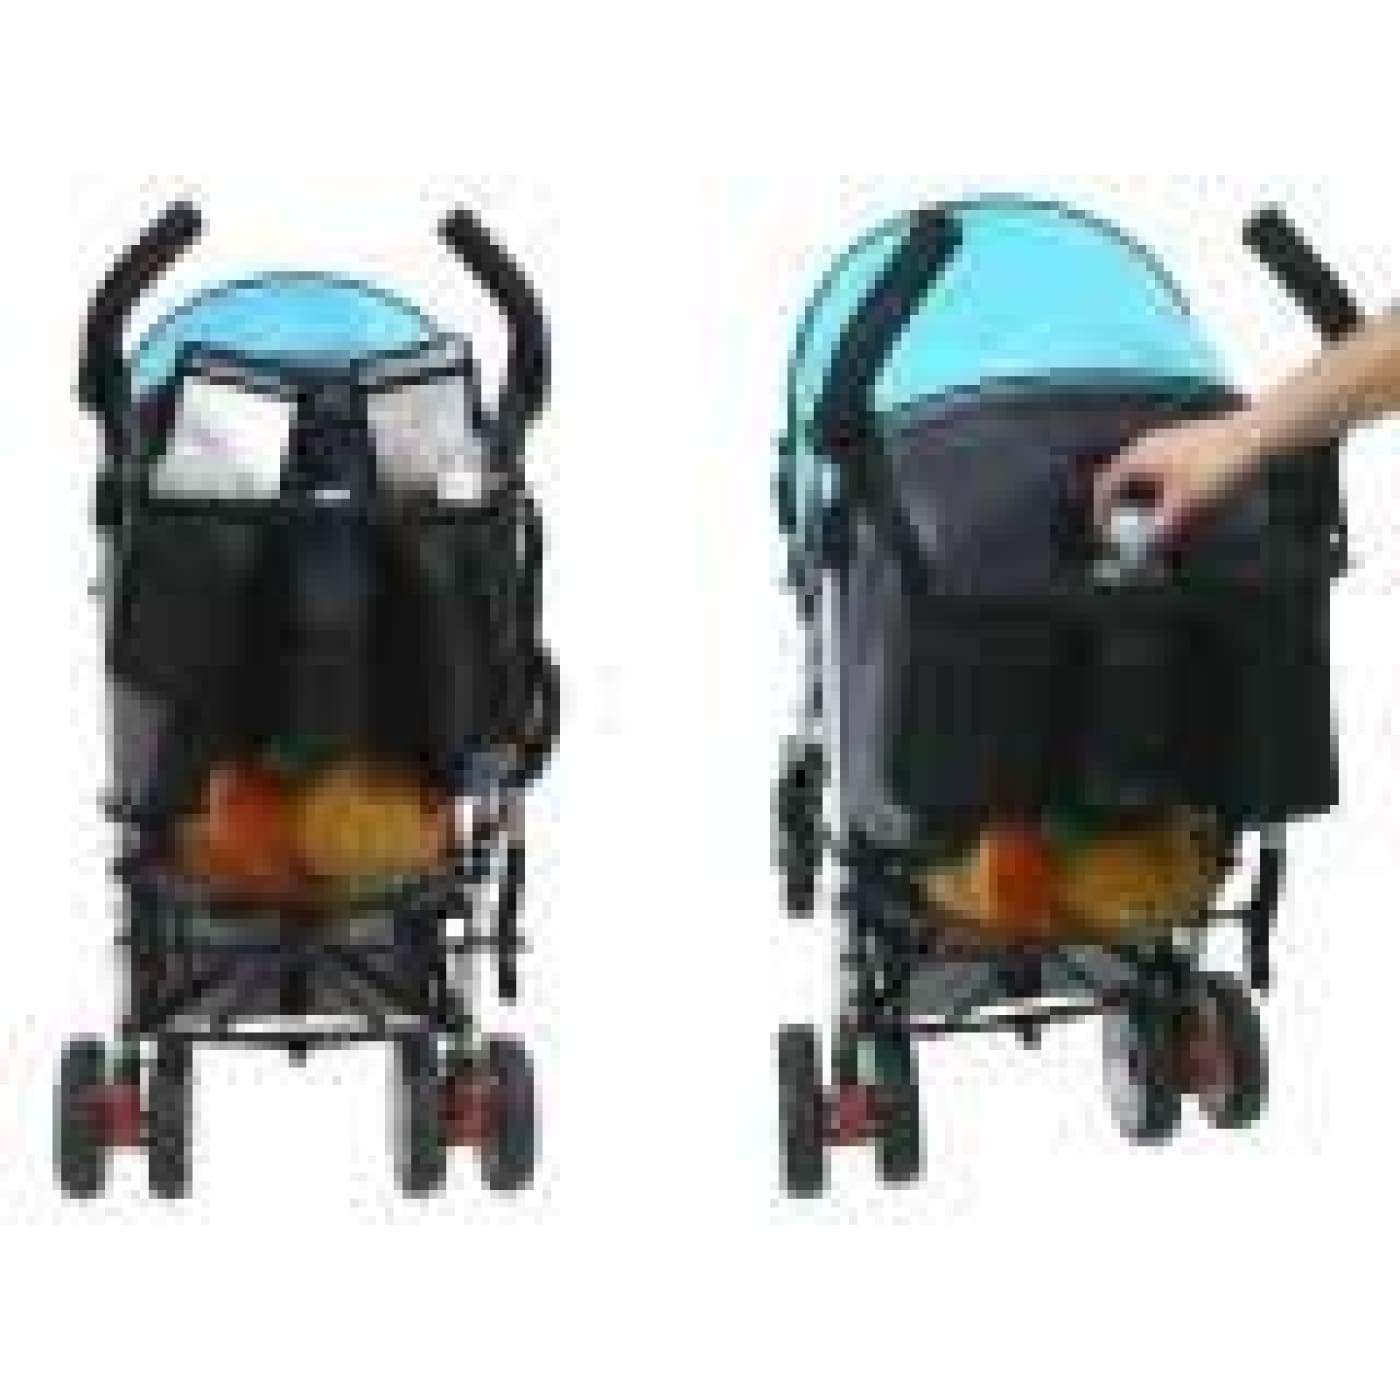 valco baby stroller caddy